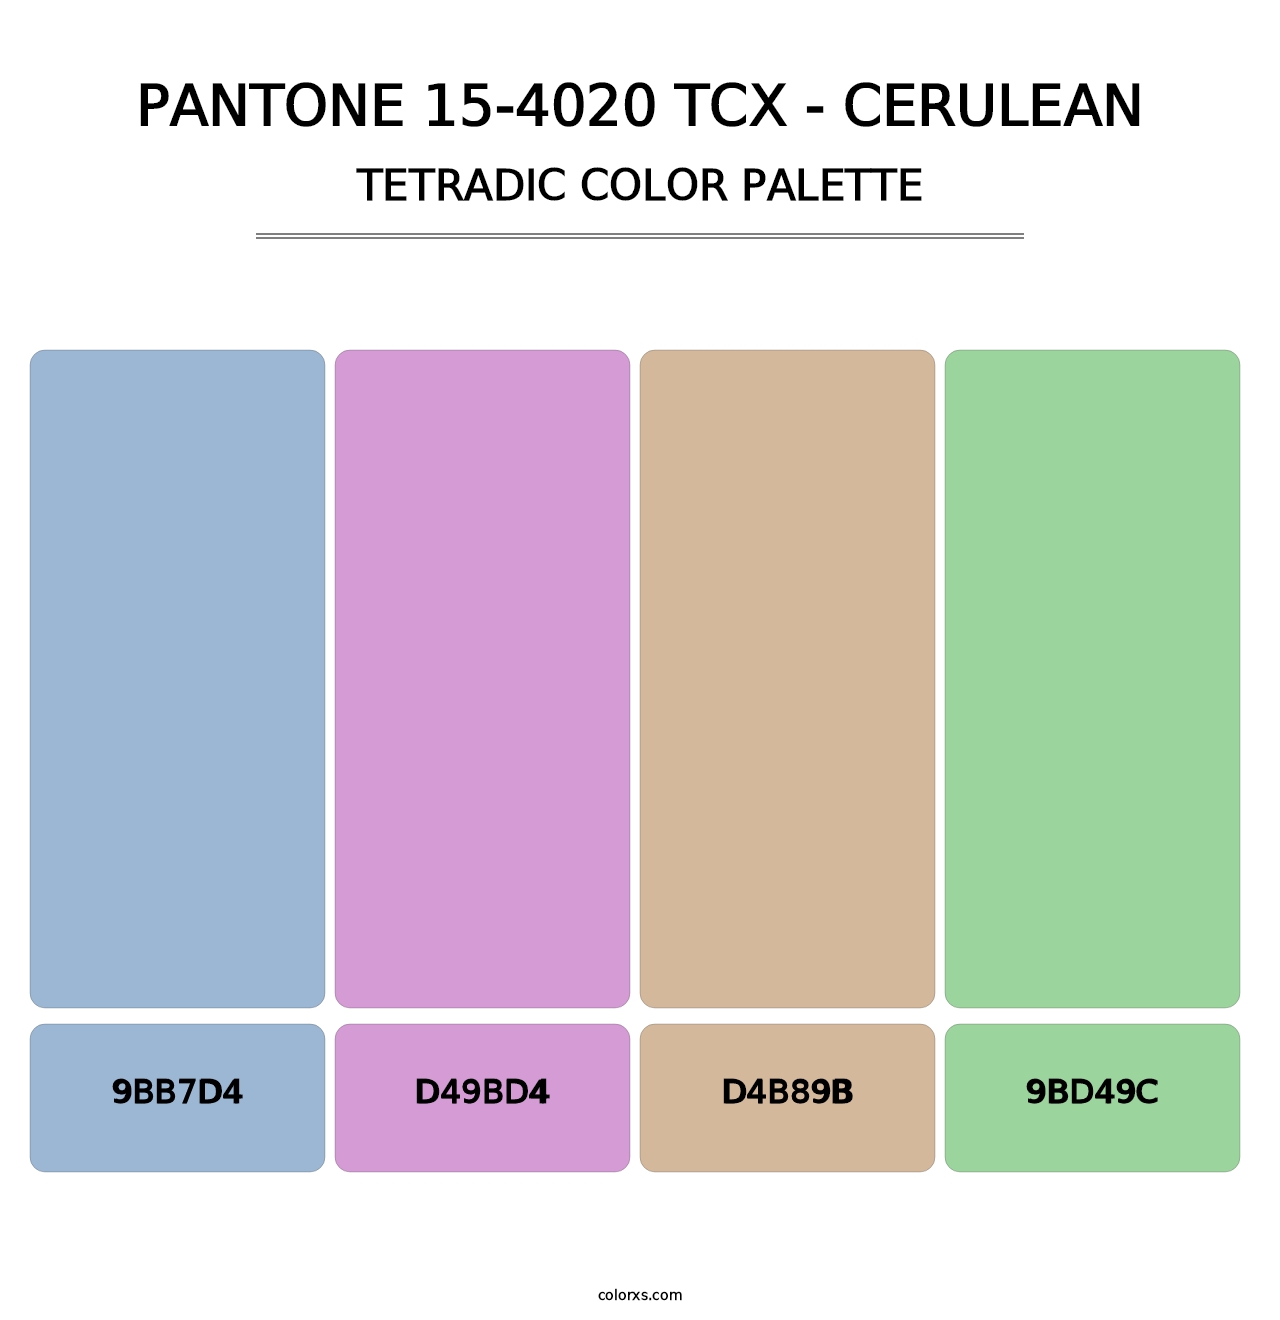 PANTONE 15-4020 TCX - Cerulean - Tetradic Color Palette